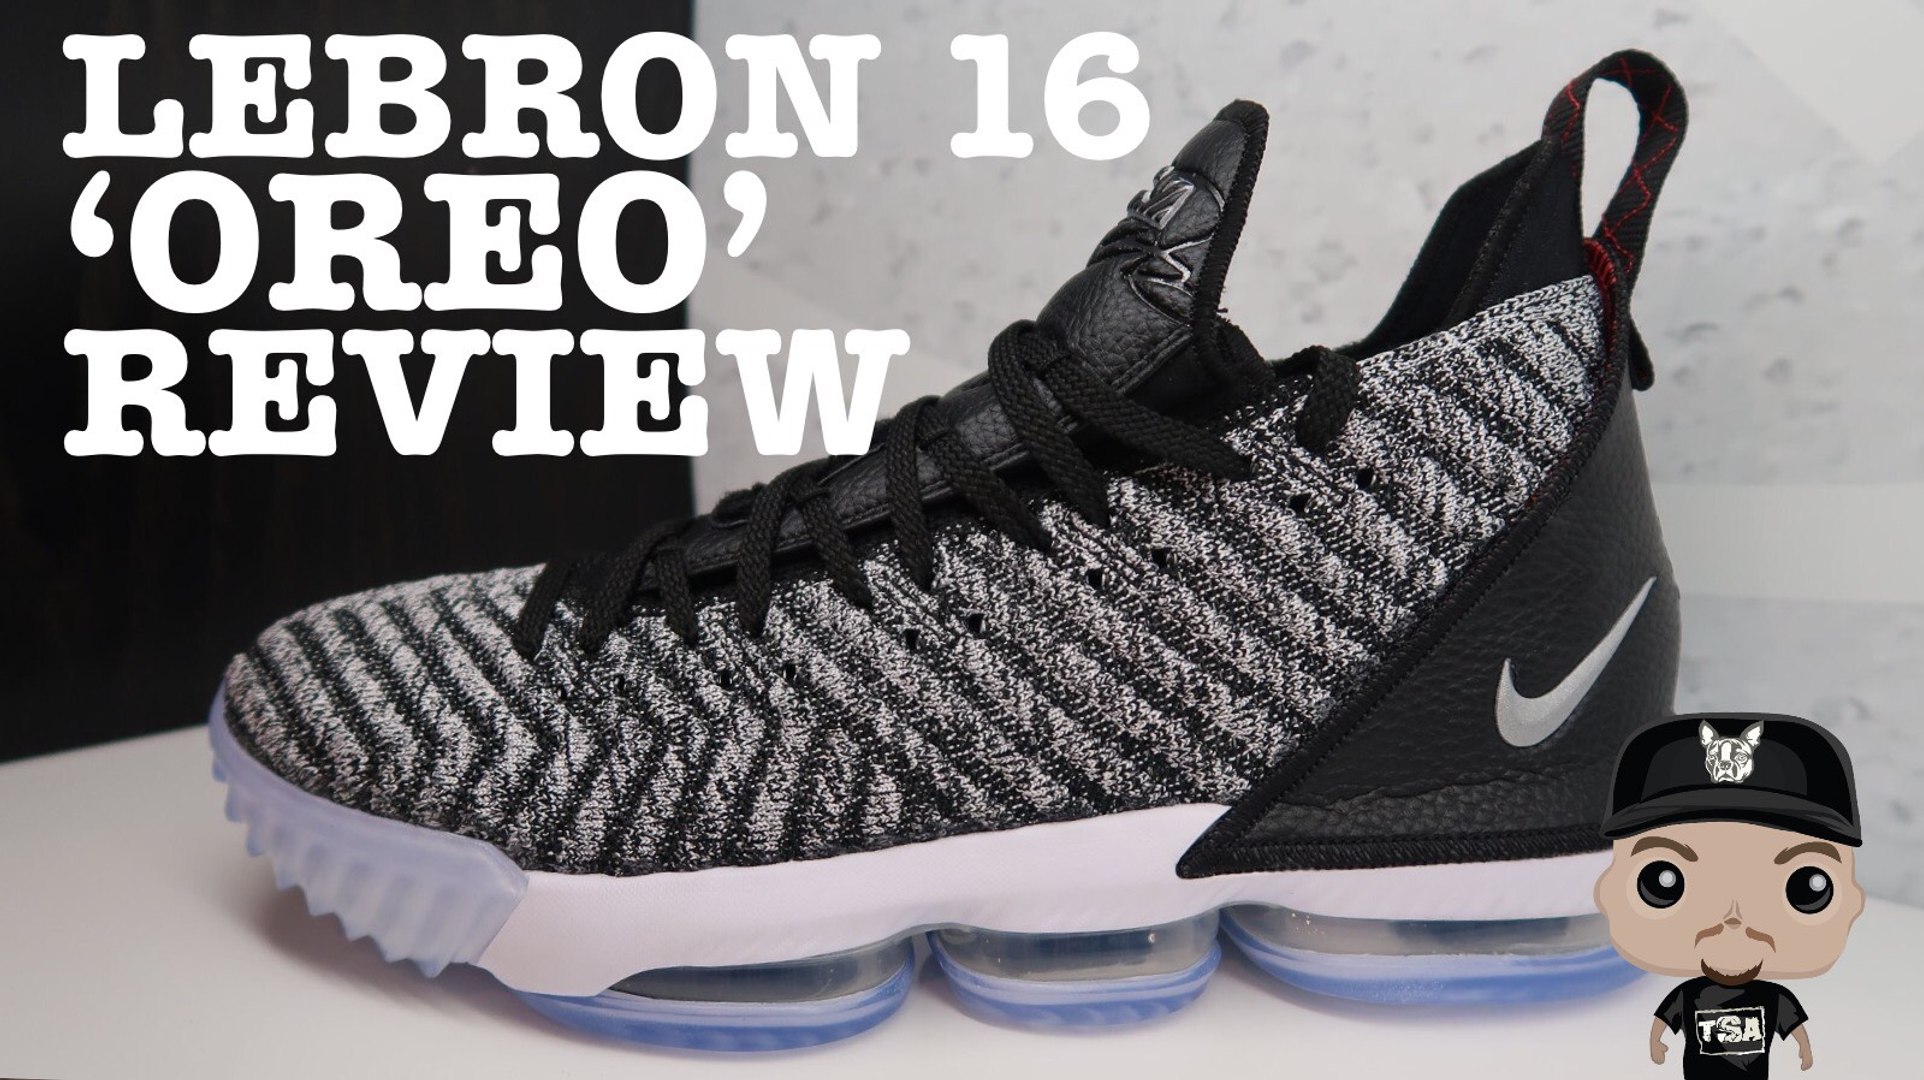 Nike Lebron 16 Oreo Sneaker Detailed Review - video Dailymotion